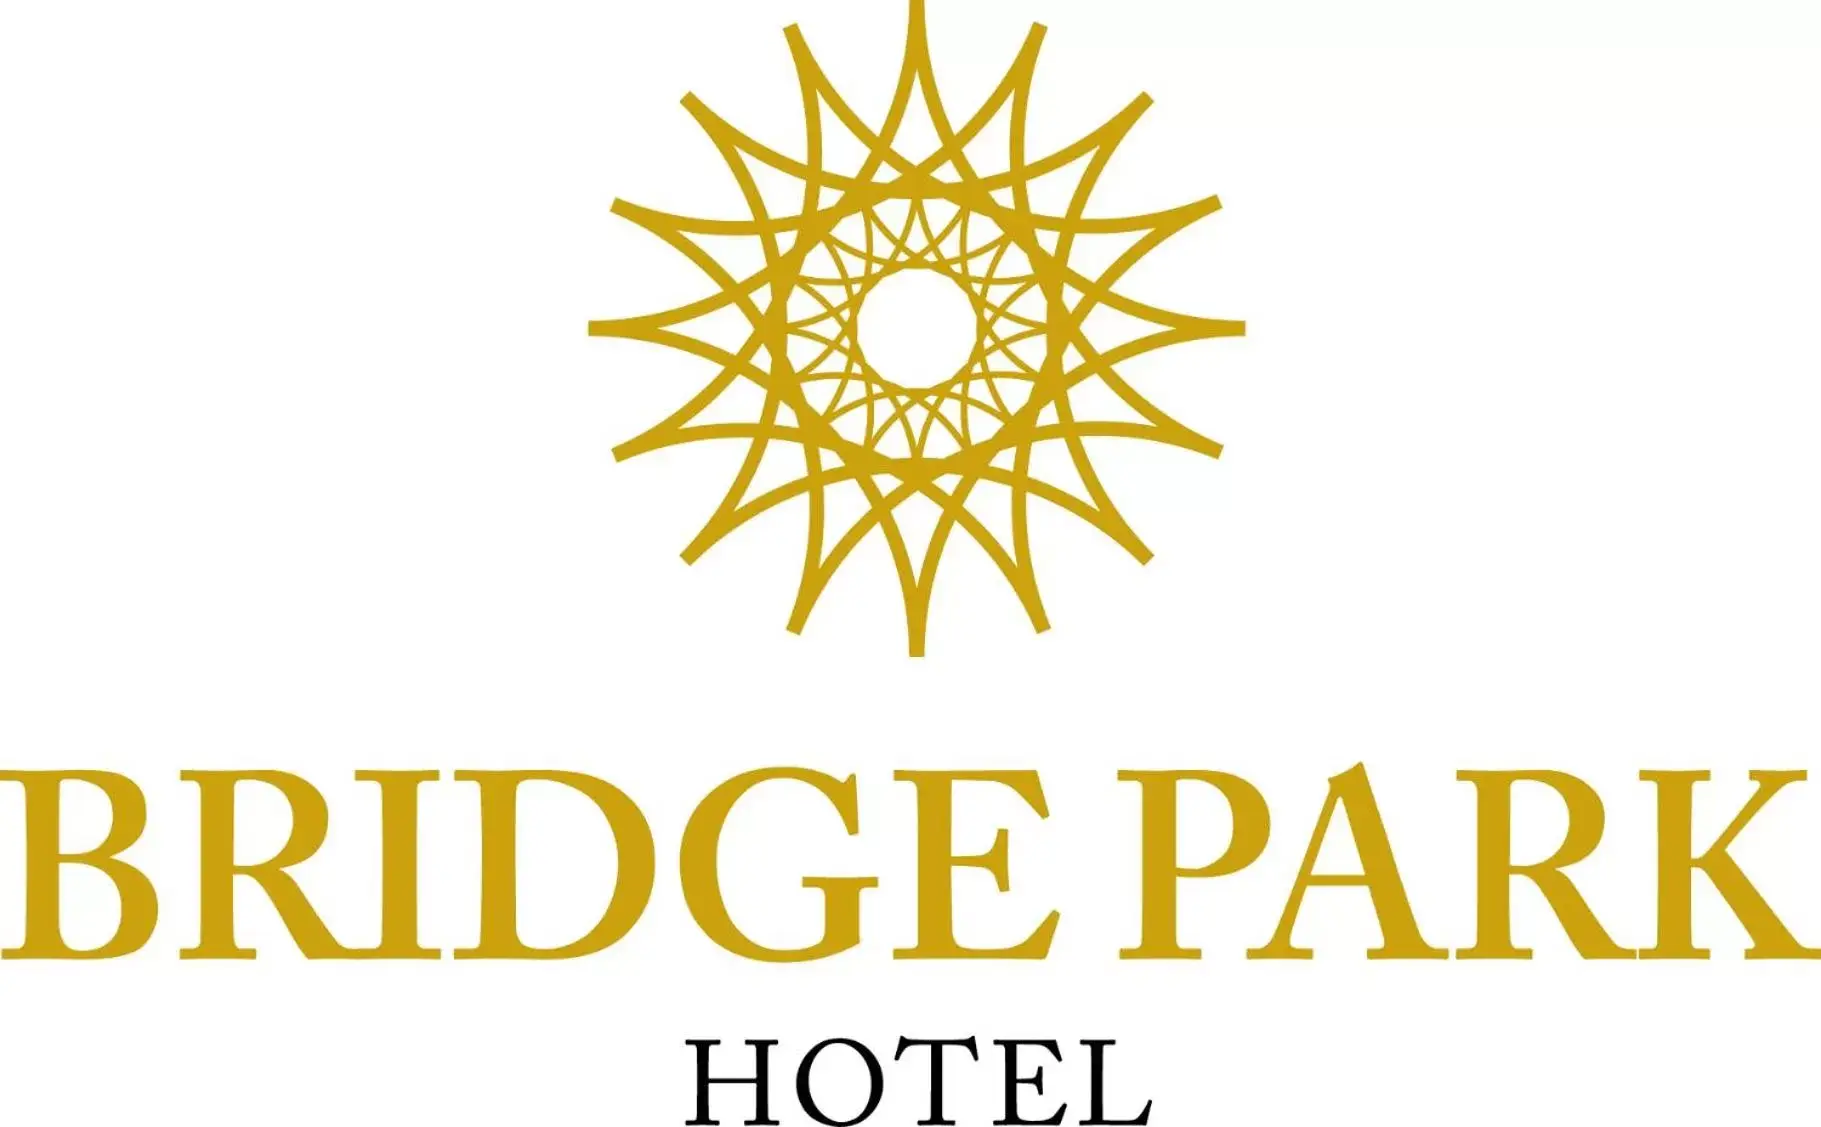 Property logo or sign in Bridge Park Hotel